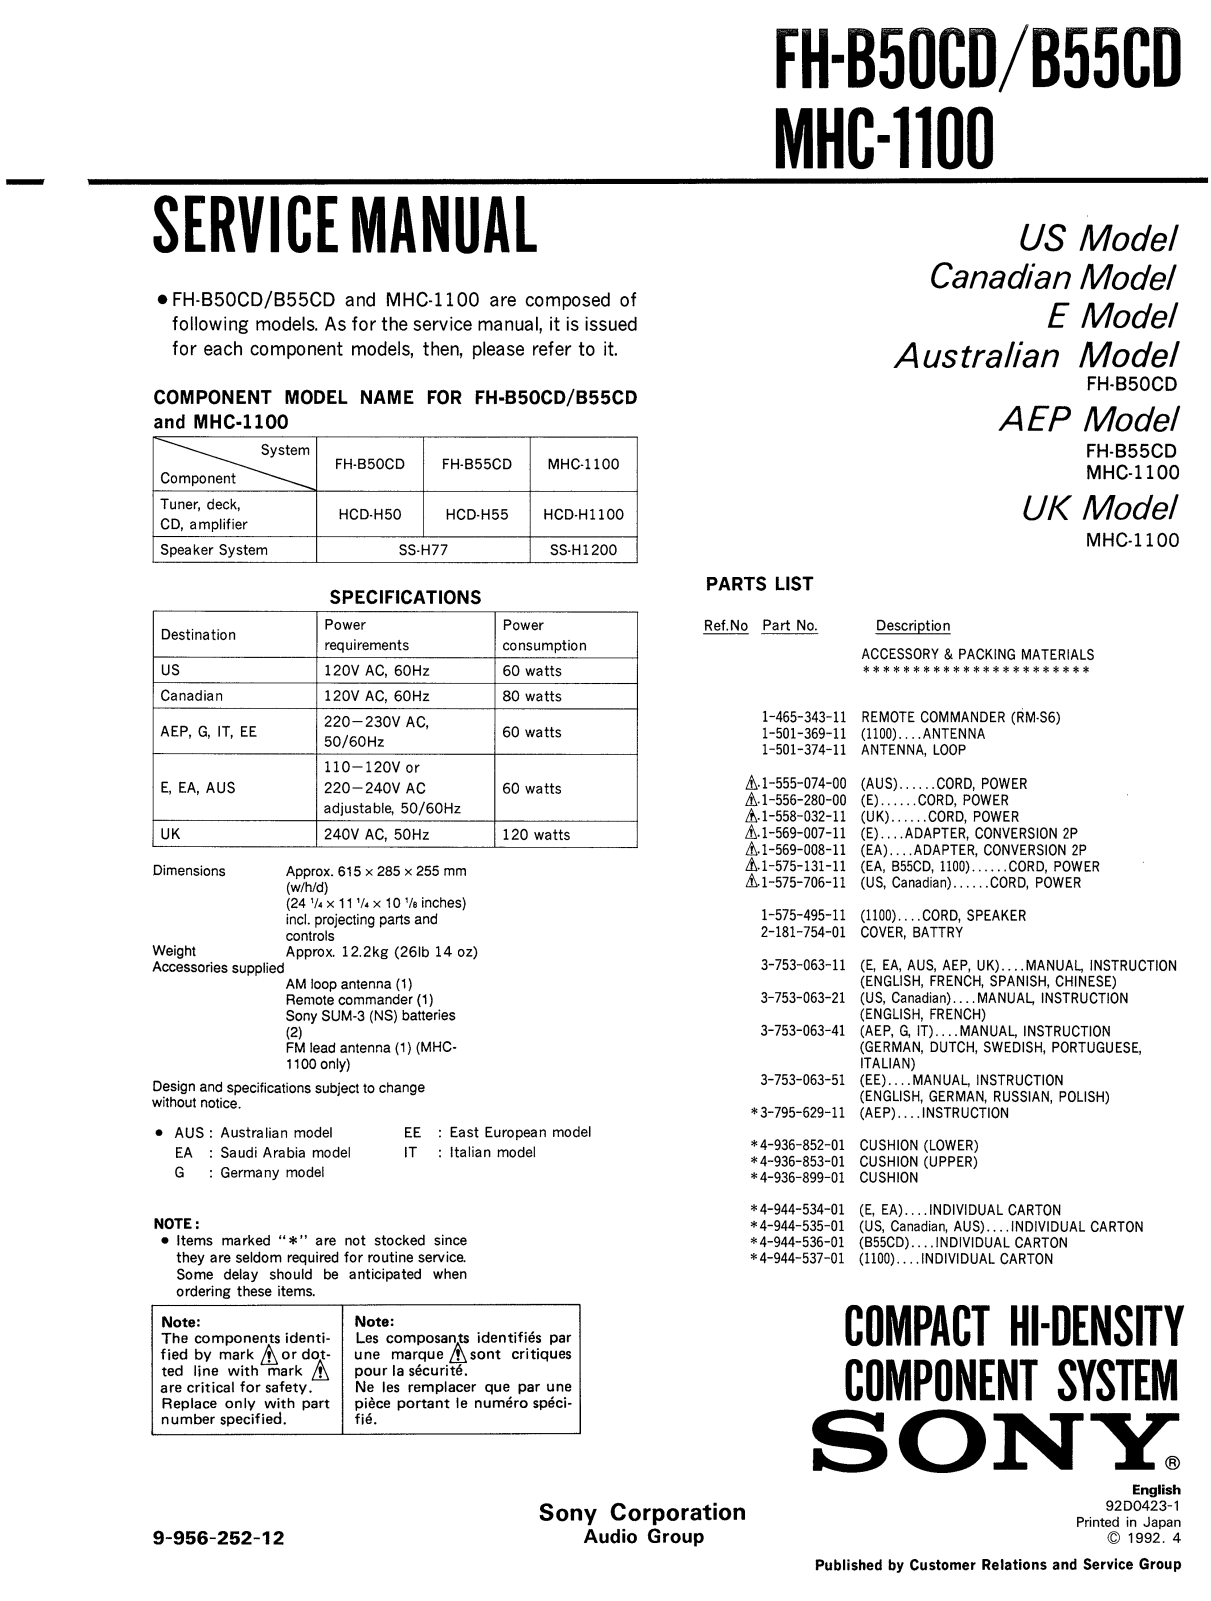 SONY FH-B50CD, FH-B55CD, MHC-1100 SERVICE MANUAL